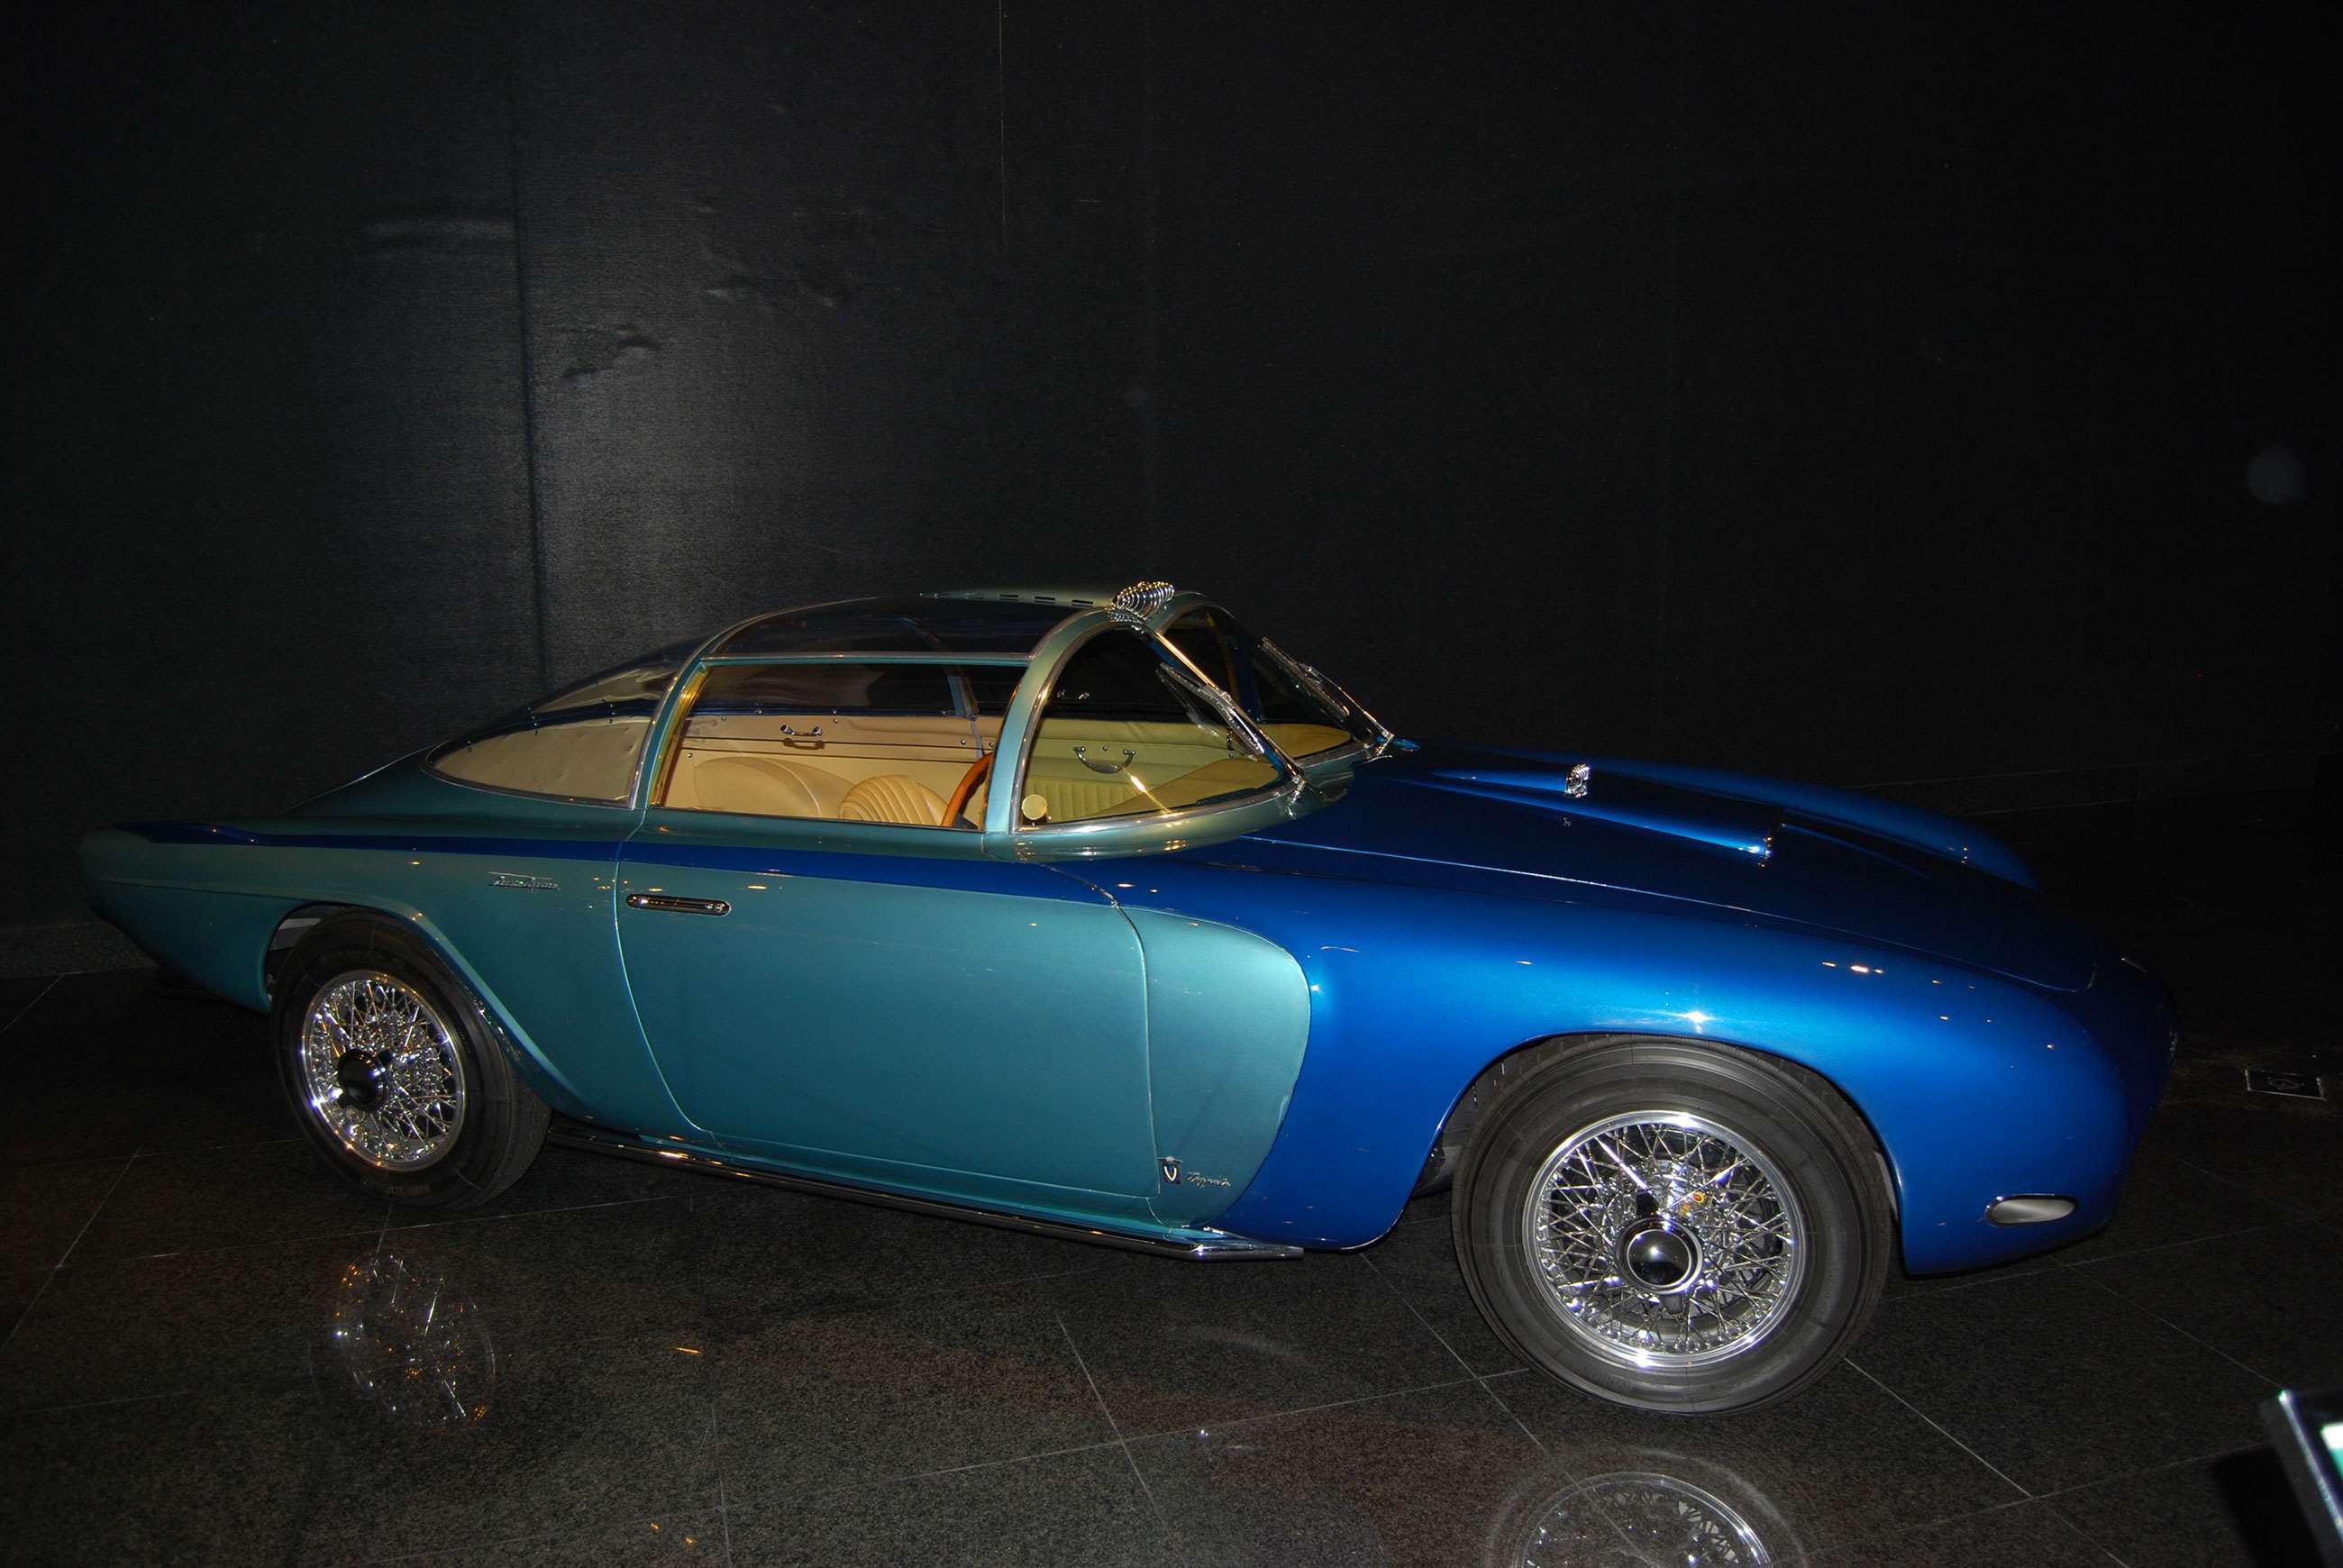 best-lancia-concept-cars-2-1955-nardi-raggio-azzurro-i-goodwood-15112021.jpg